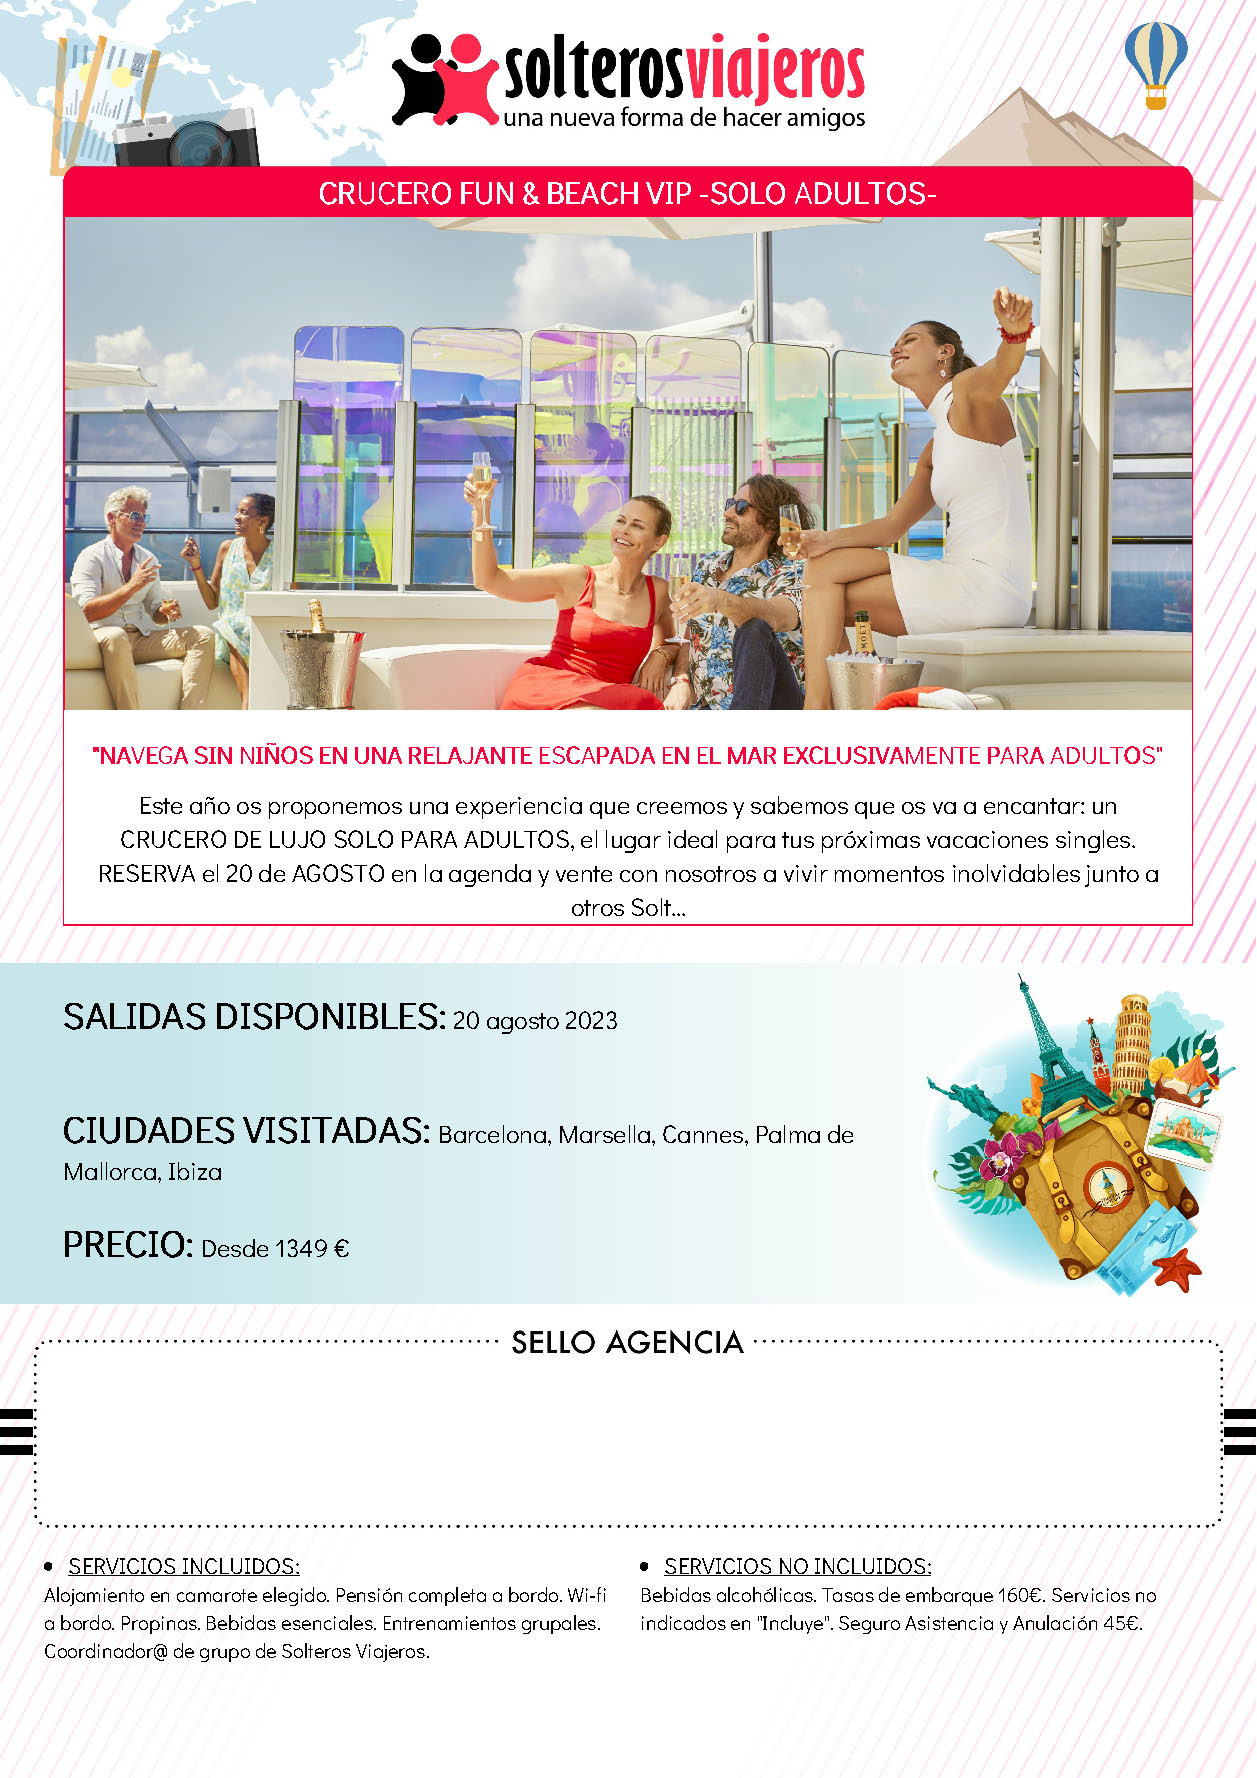 Oferta Singles Solteros Viajeros Agosto 2023 Crucero Mediterraneo Fun and Beach VIP solo adultos